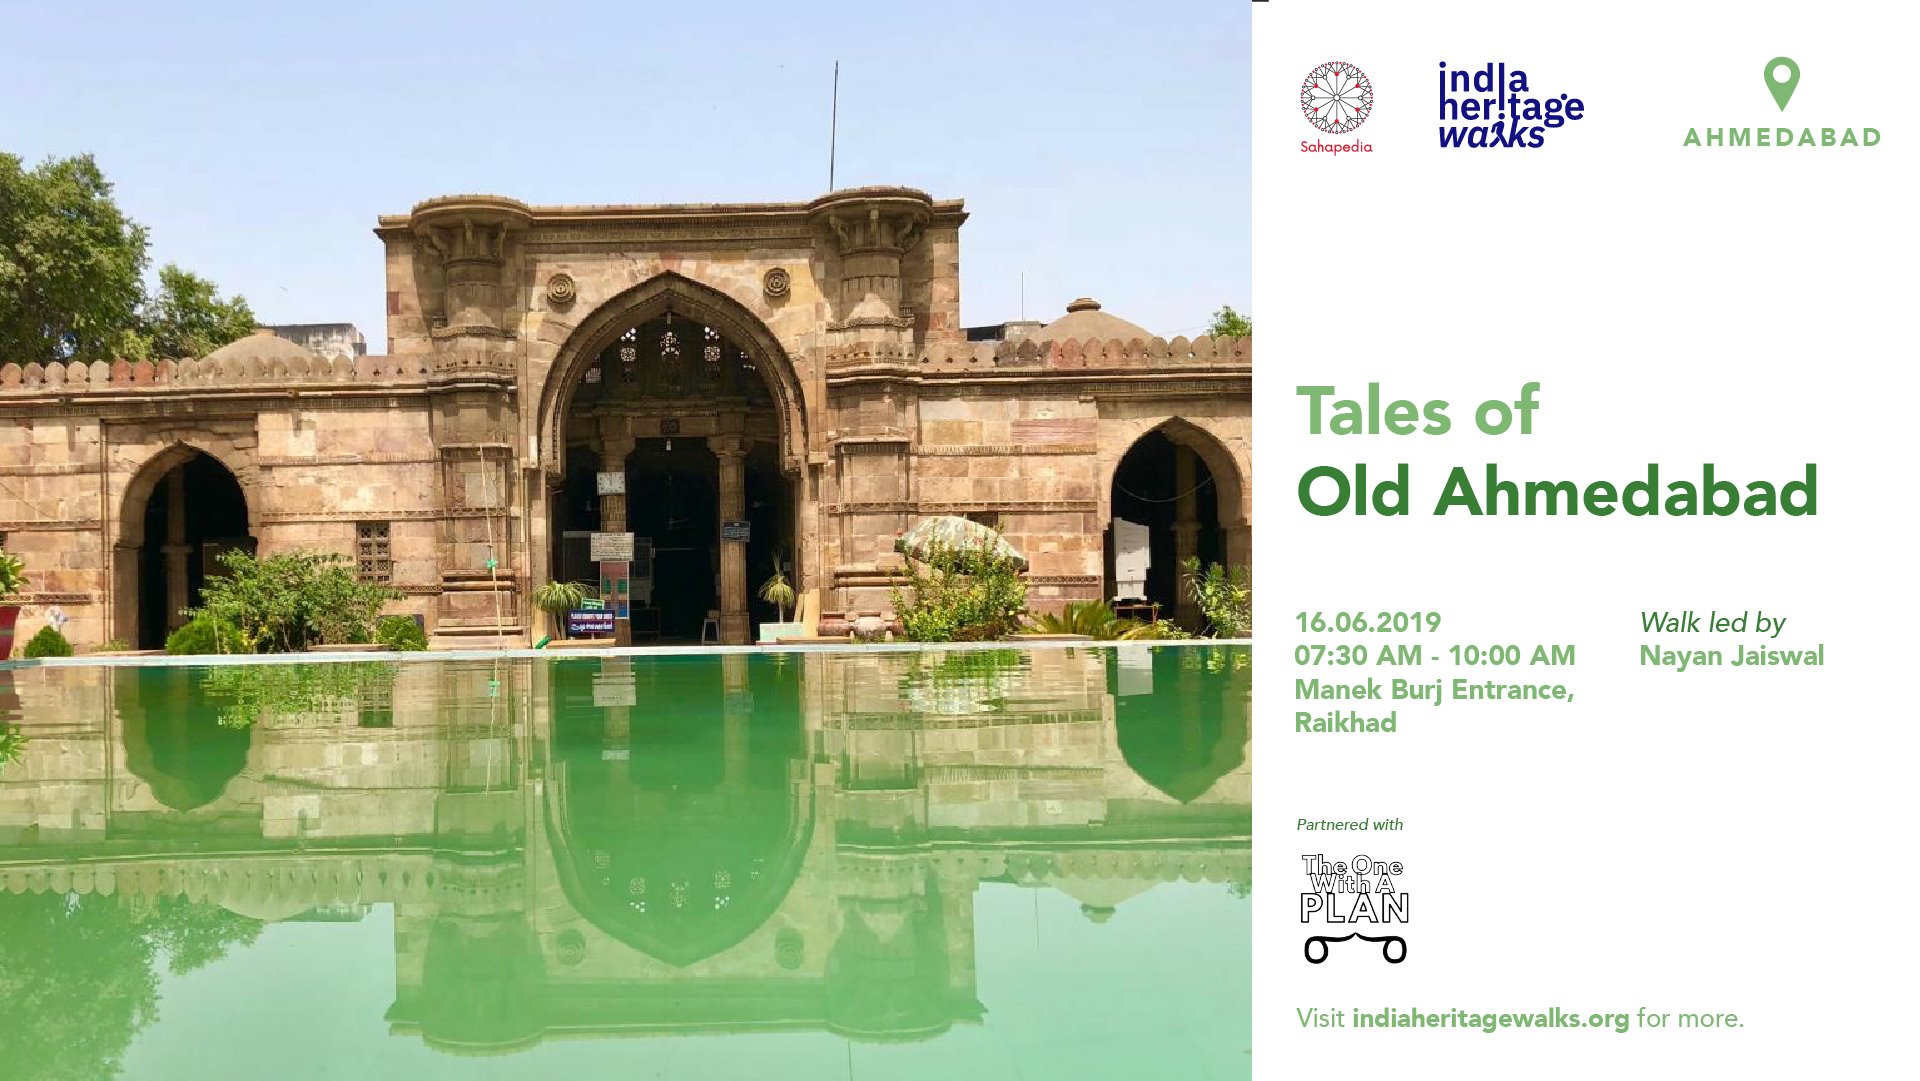 https://creativeyatra.com/wp-content/uploads/2019/06/Tales-of-Old-Ahmedabad1.jpg